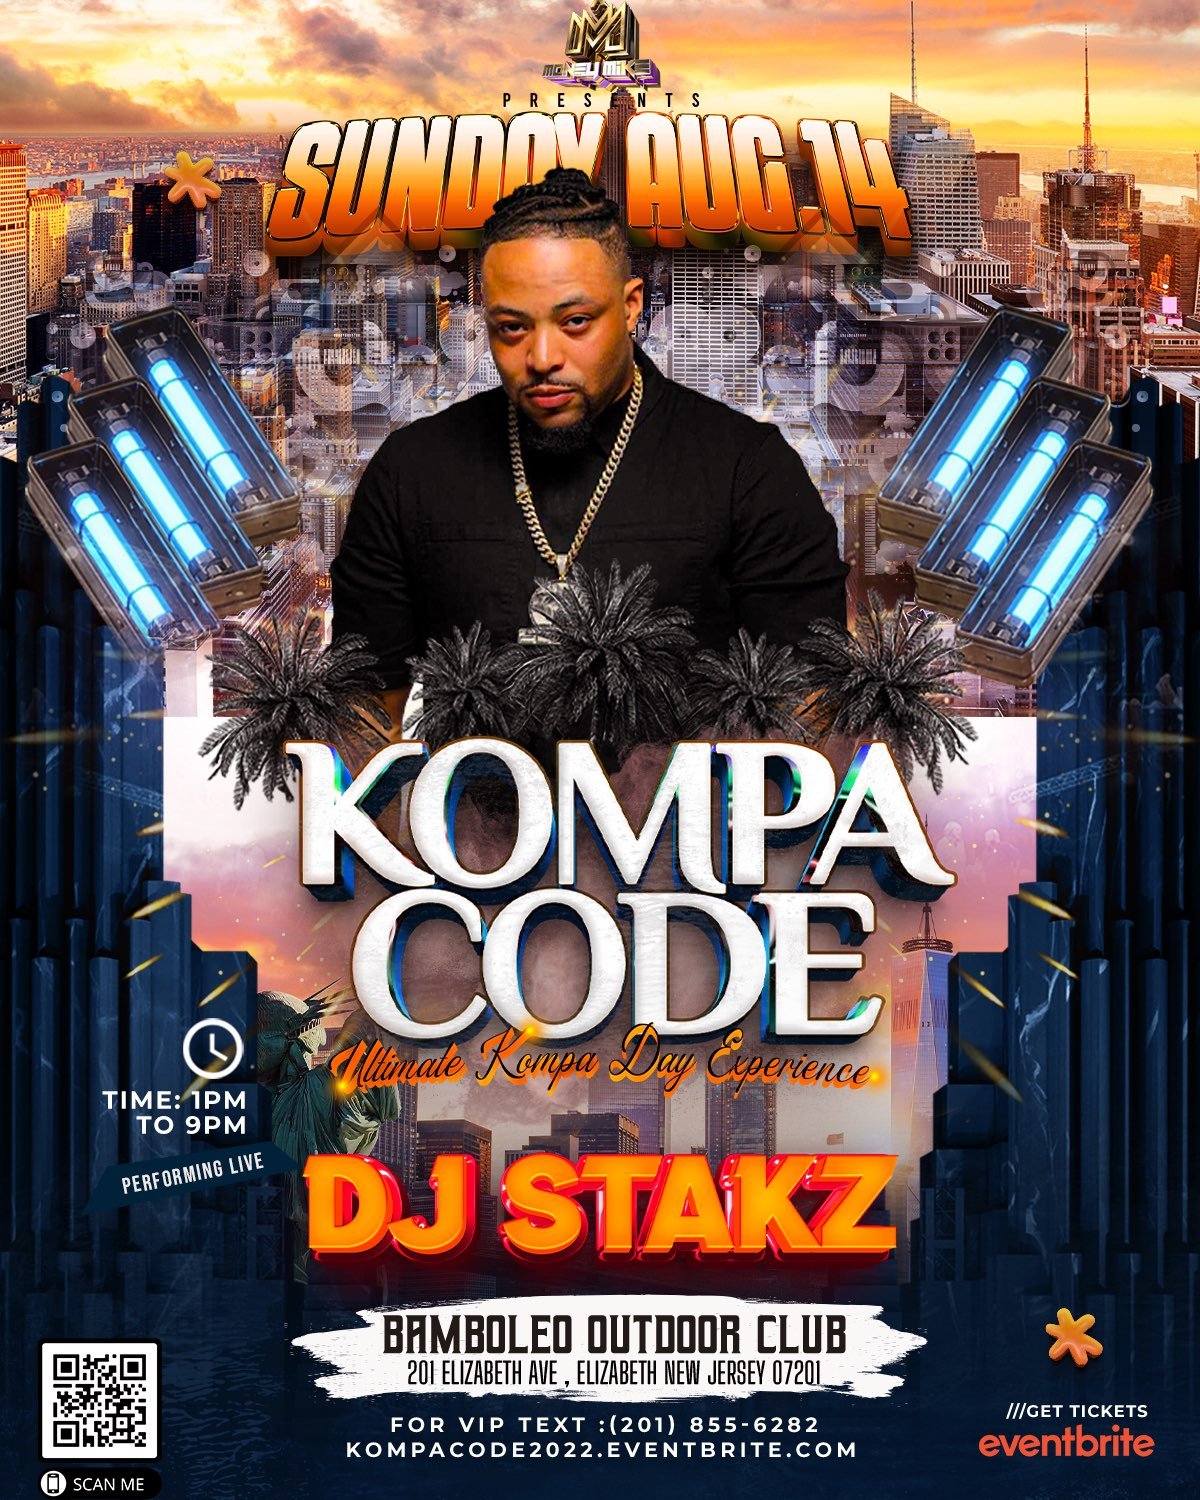 Overlevelse Efternavn Har råd til Kompa Code: The Ultimate Kompa Day Experience — DJ STAKZ